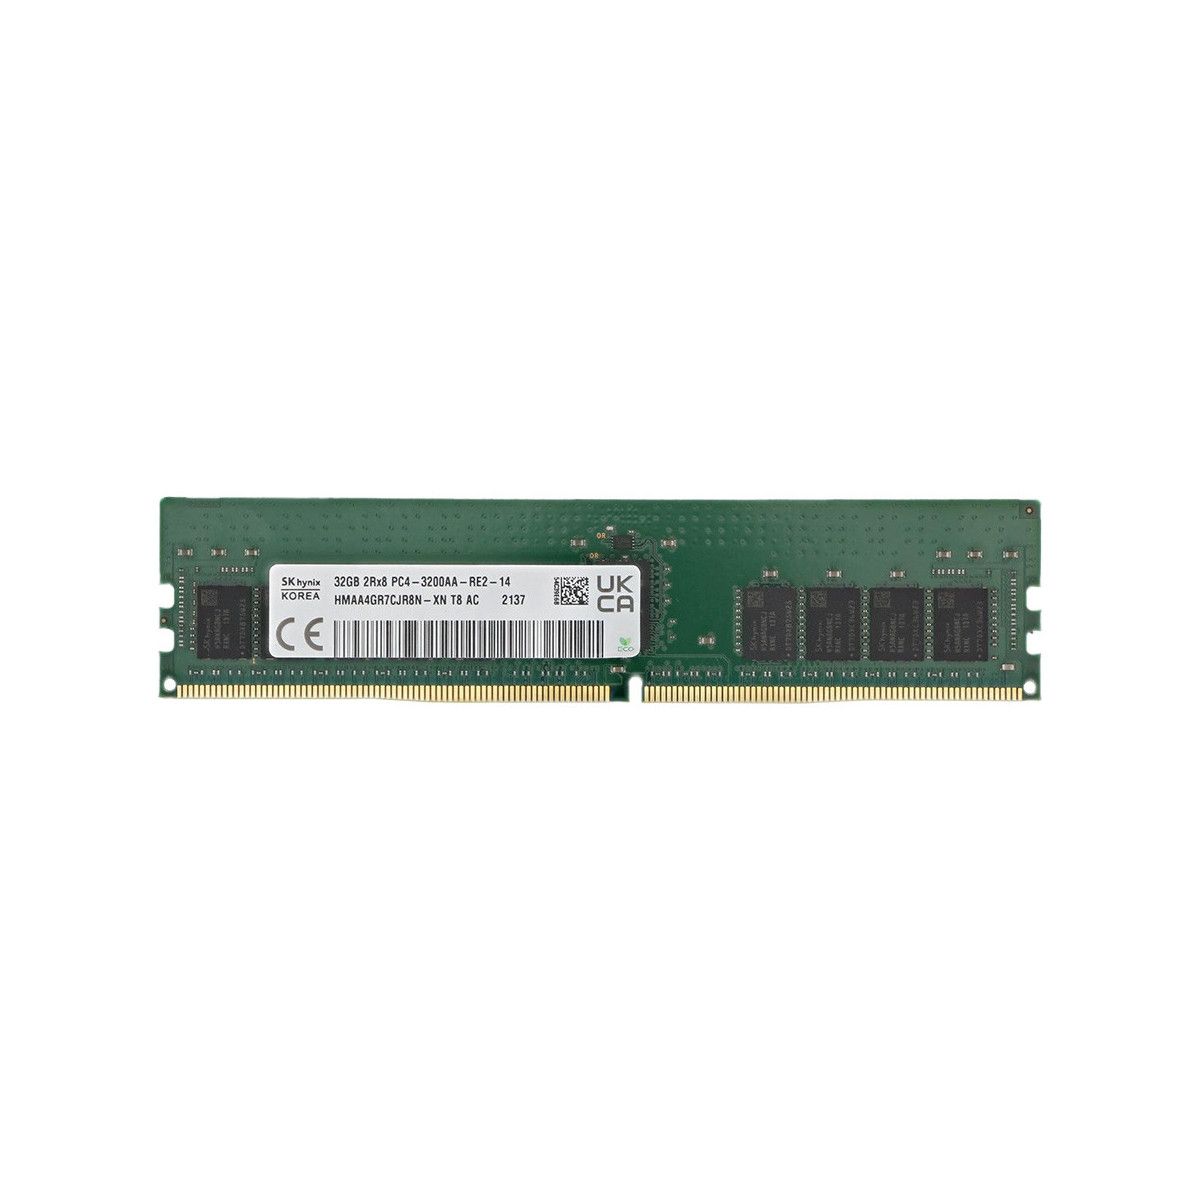 UCSX-MR-X32G1RW-MS - Memstar 1x 32GB DDR4-3200 RDIMM PC4-25600R - Mem-Star OEM compatibile Memoria 1 - Memstar 